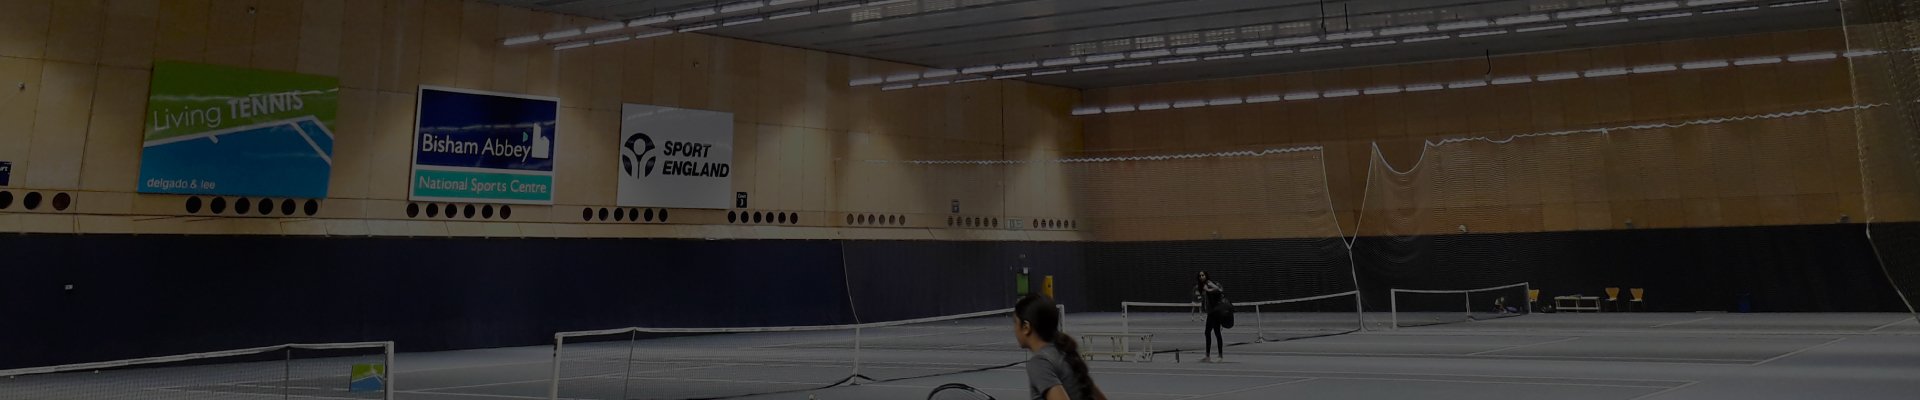 Tennis Centre Banner Image